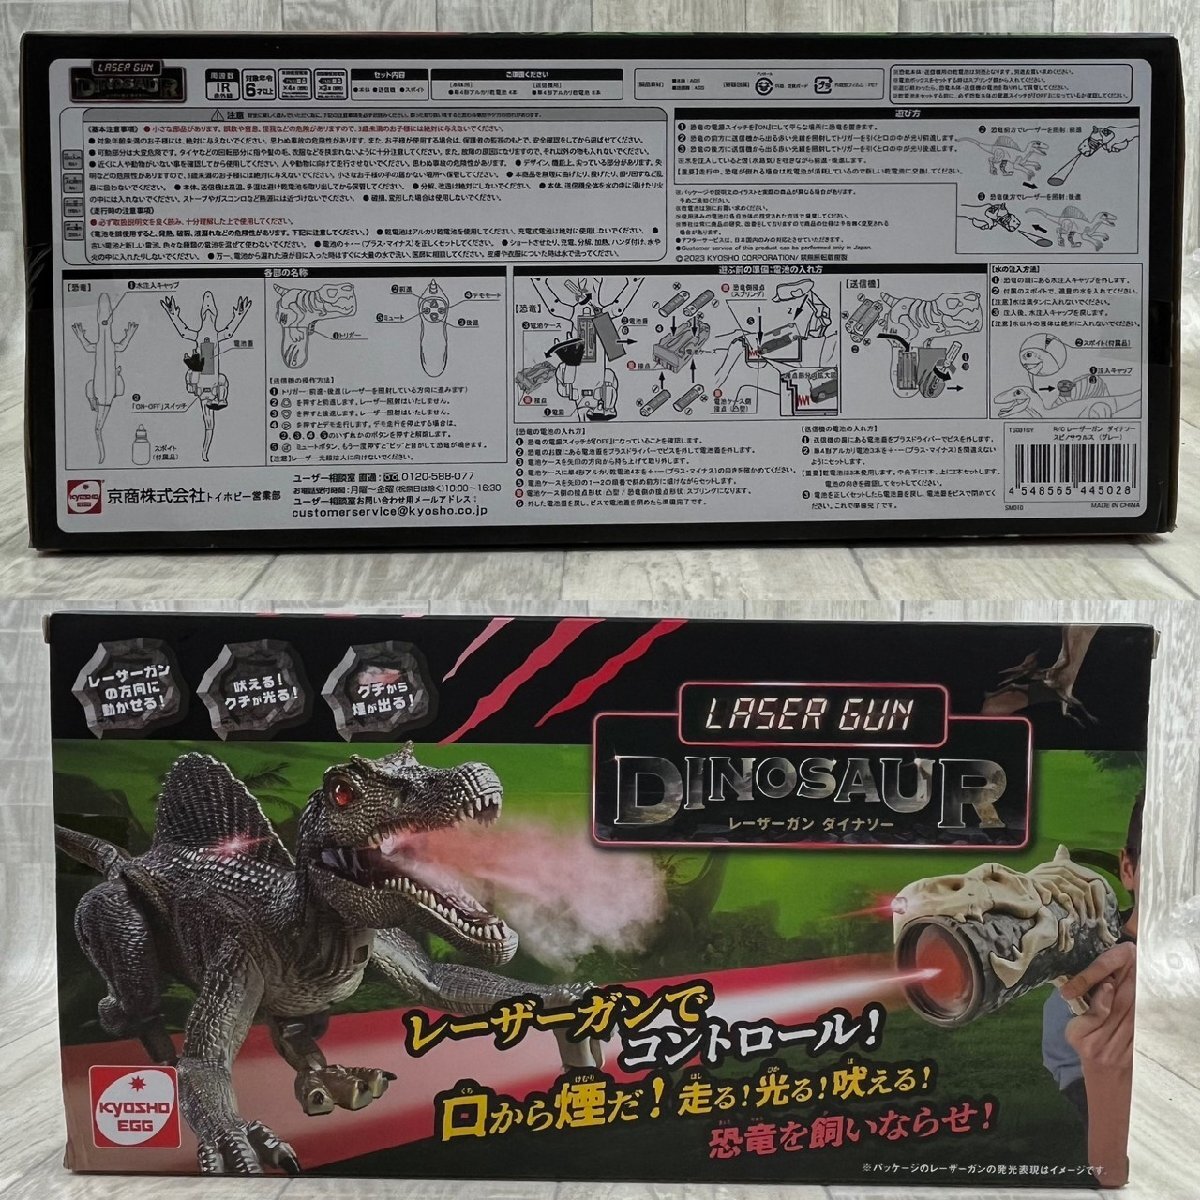  unused Kyosho kyosho EGG R/C Laser gun Dinosaur s Pinot saurus gray TS081GY infra-red rays dinosaur LASER GUN DINOSAUR SPINOSAURUS box attaching 